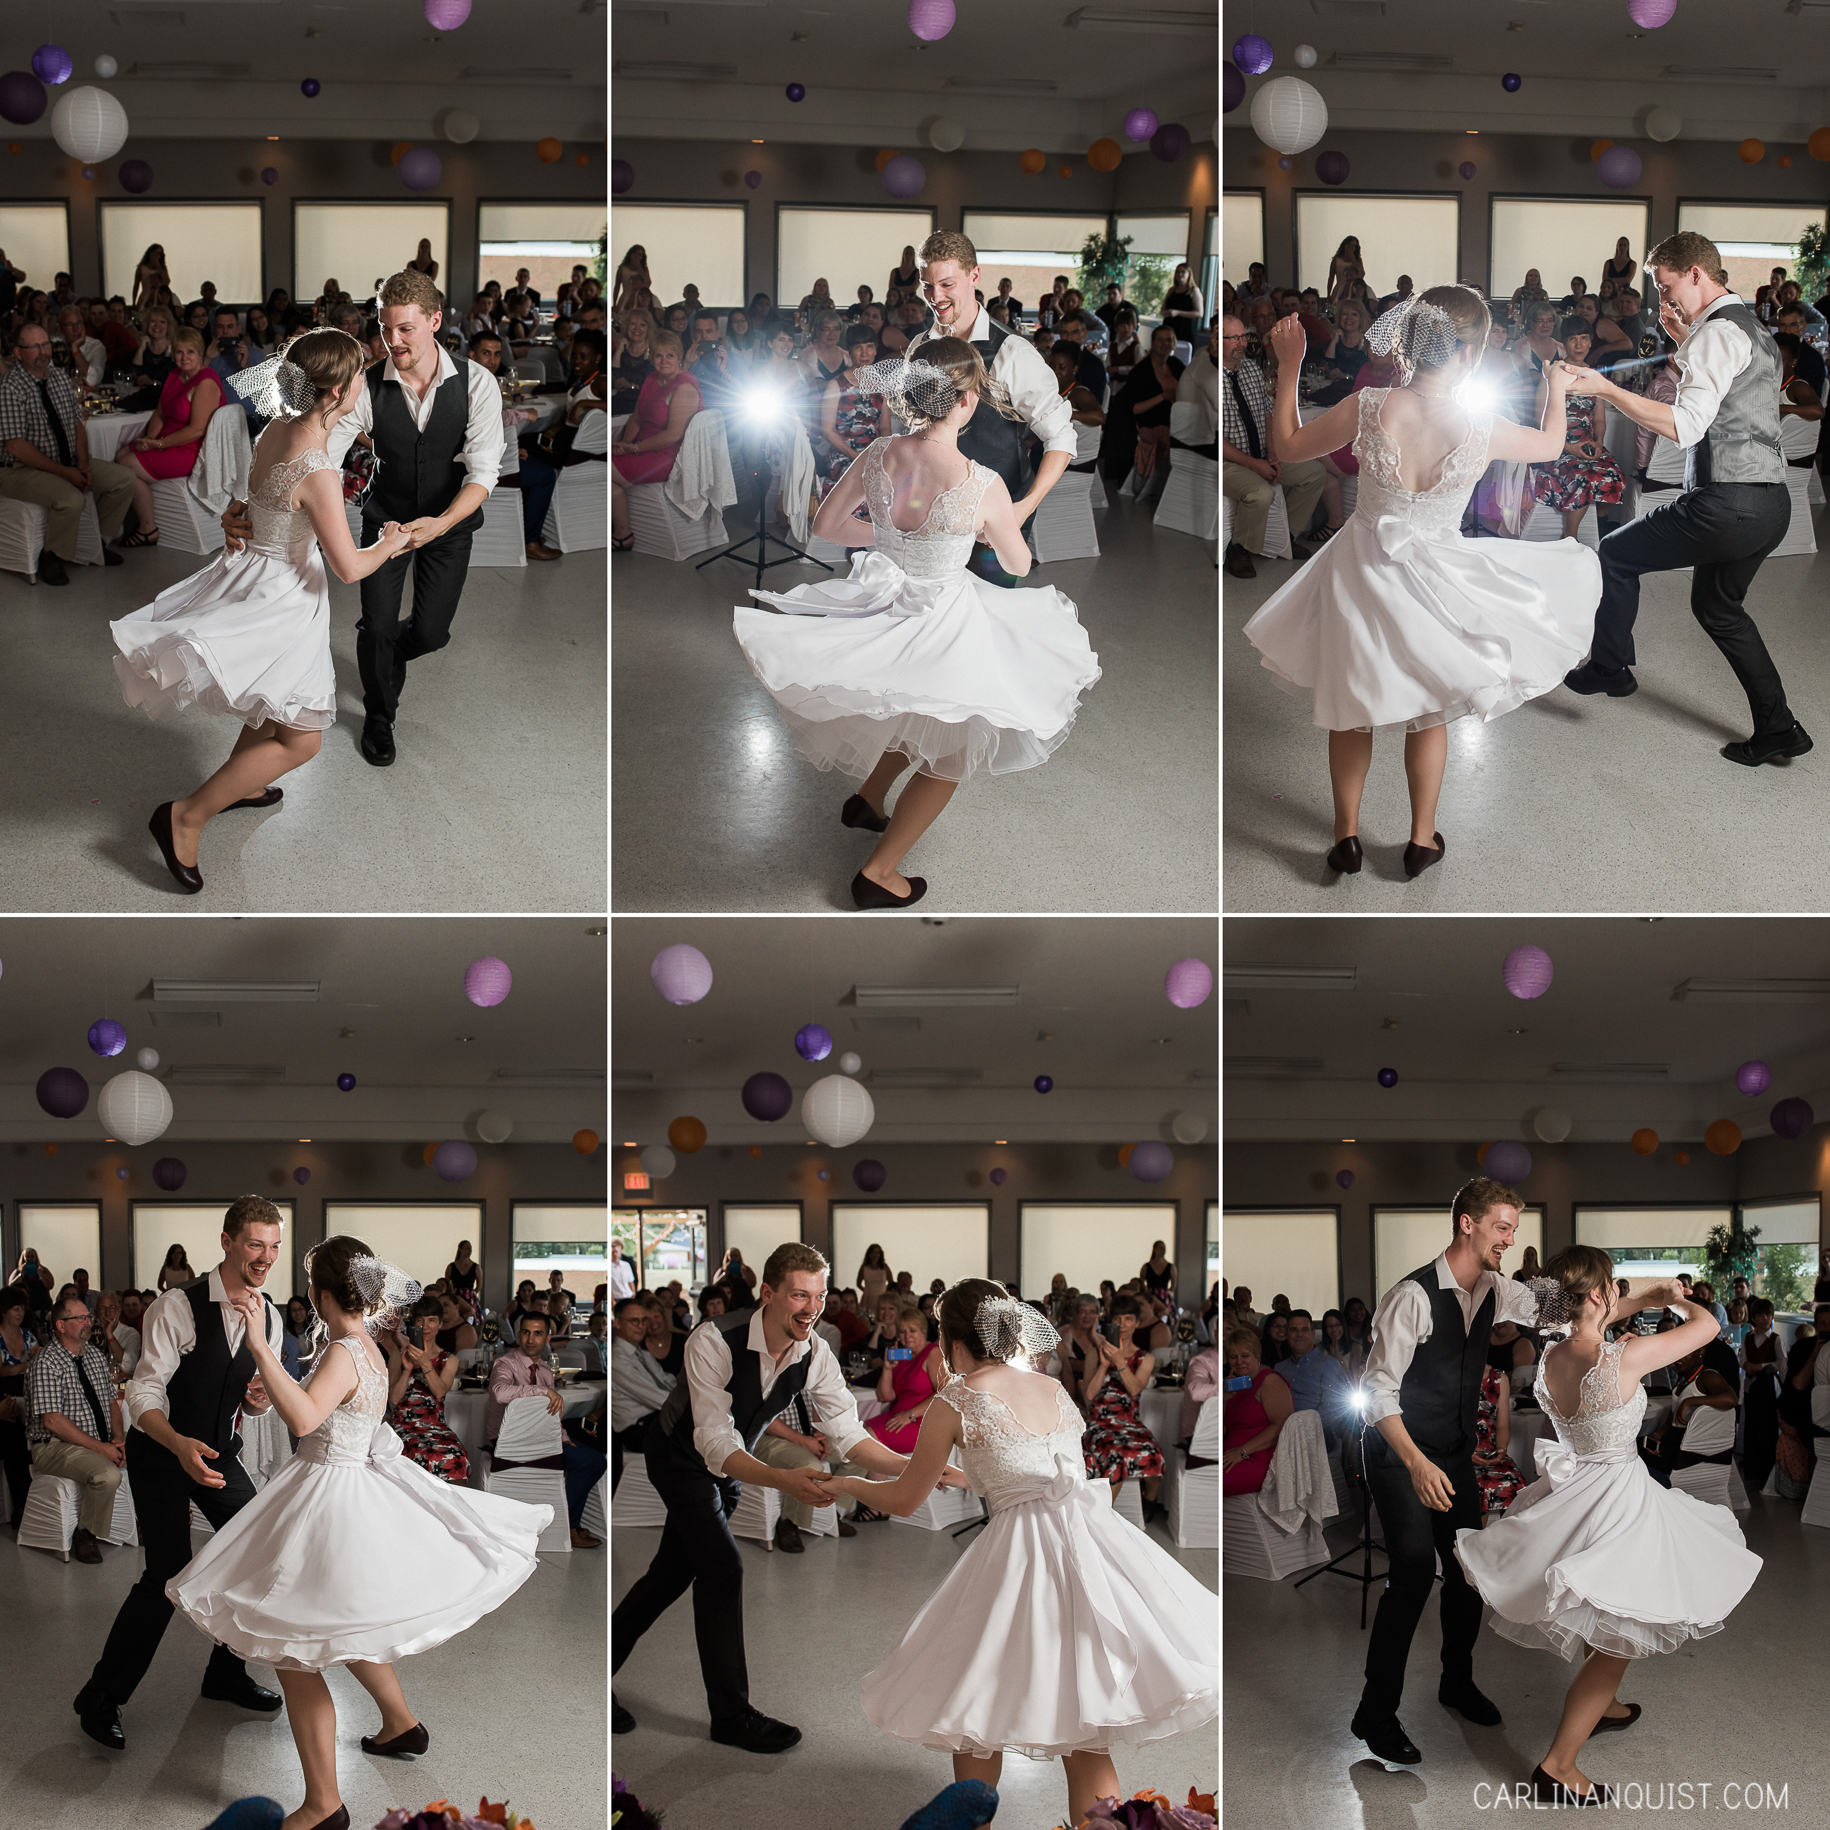 Canyon Meadows Community Association Wedding Photos | Swing Dancing